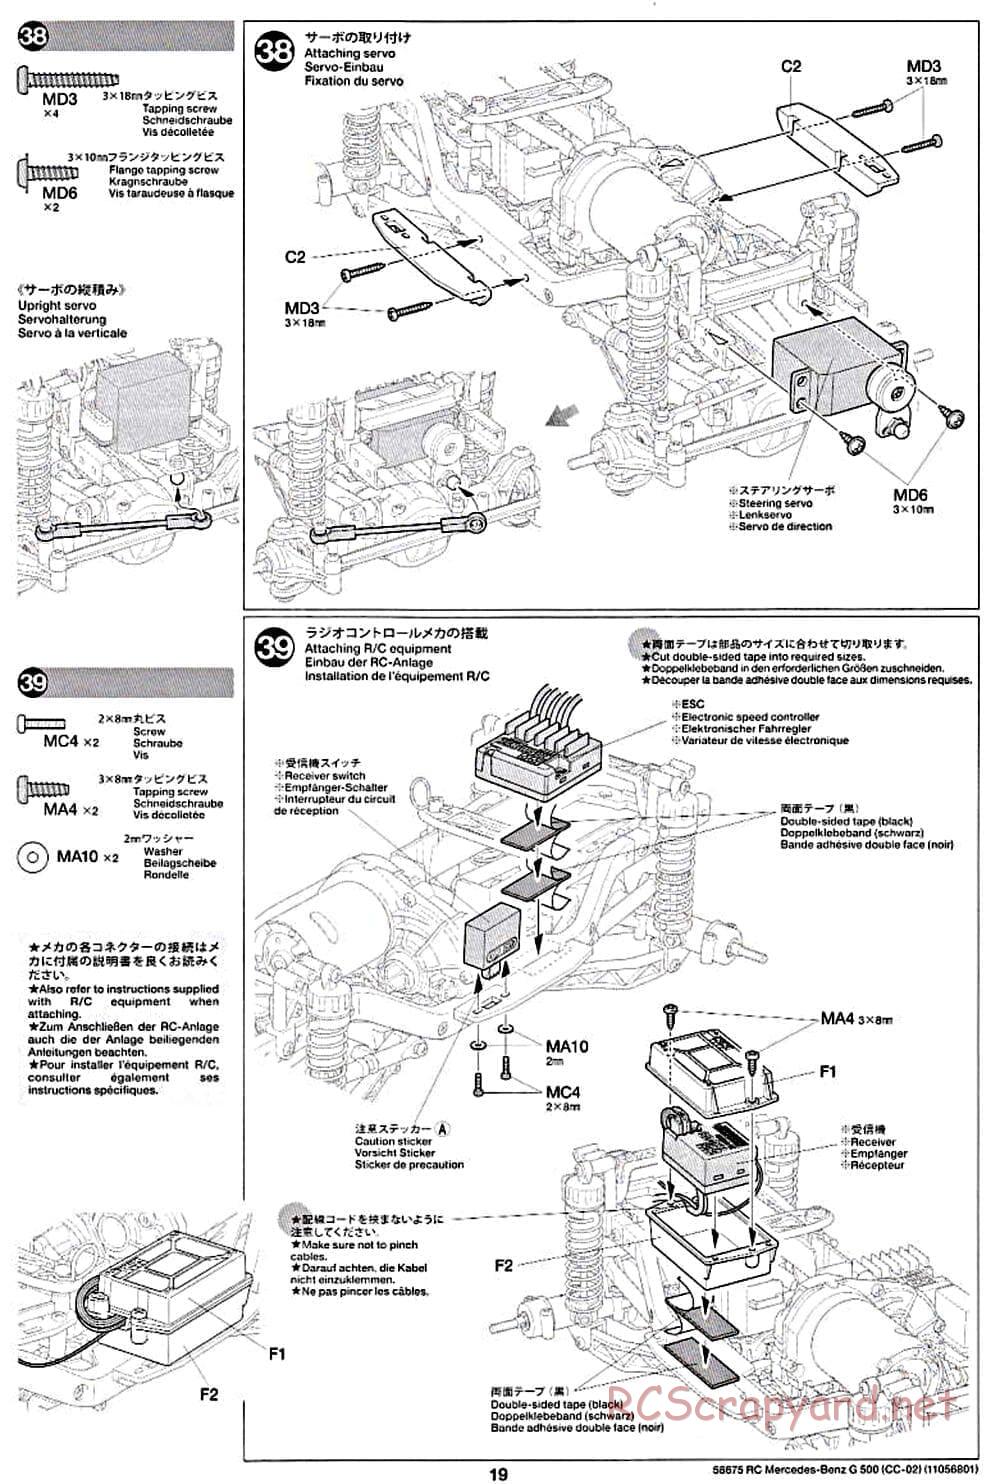 Tamiya - Mercedes-Benz G500 - CC-02 Chassis - Manual - Page 19